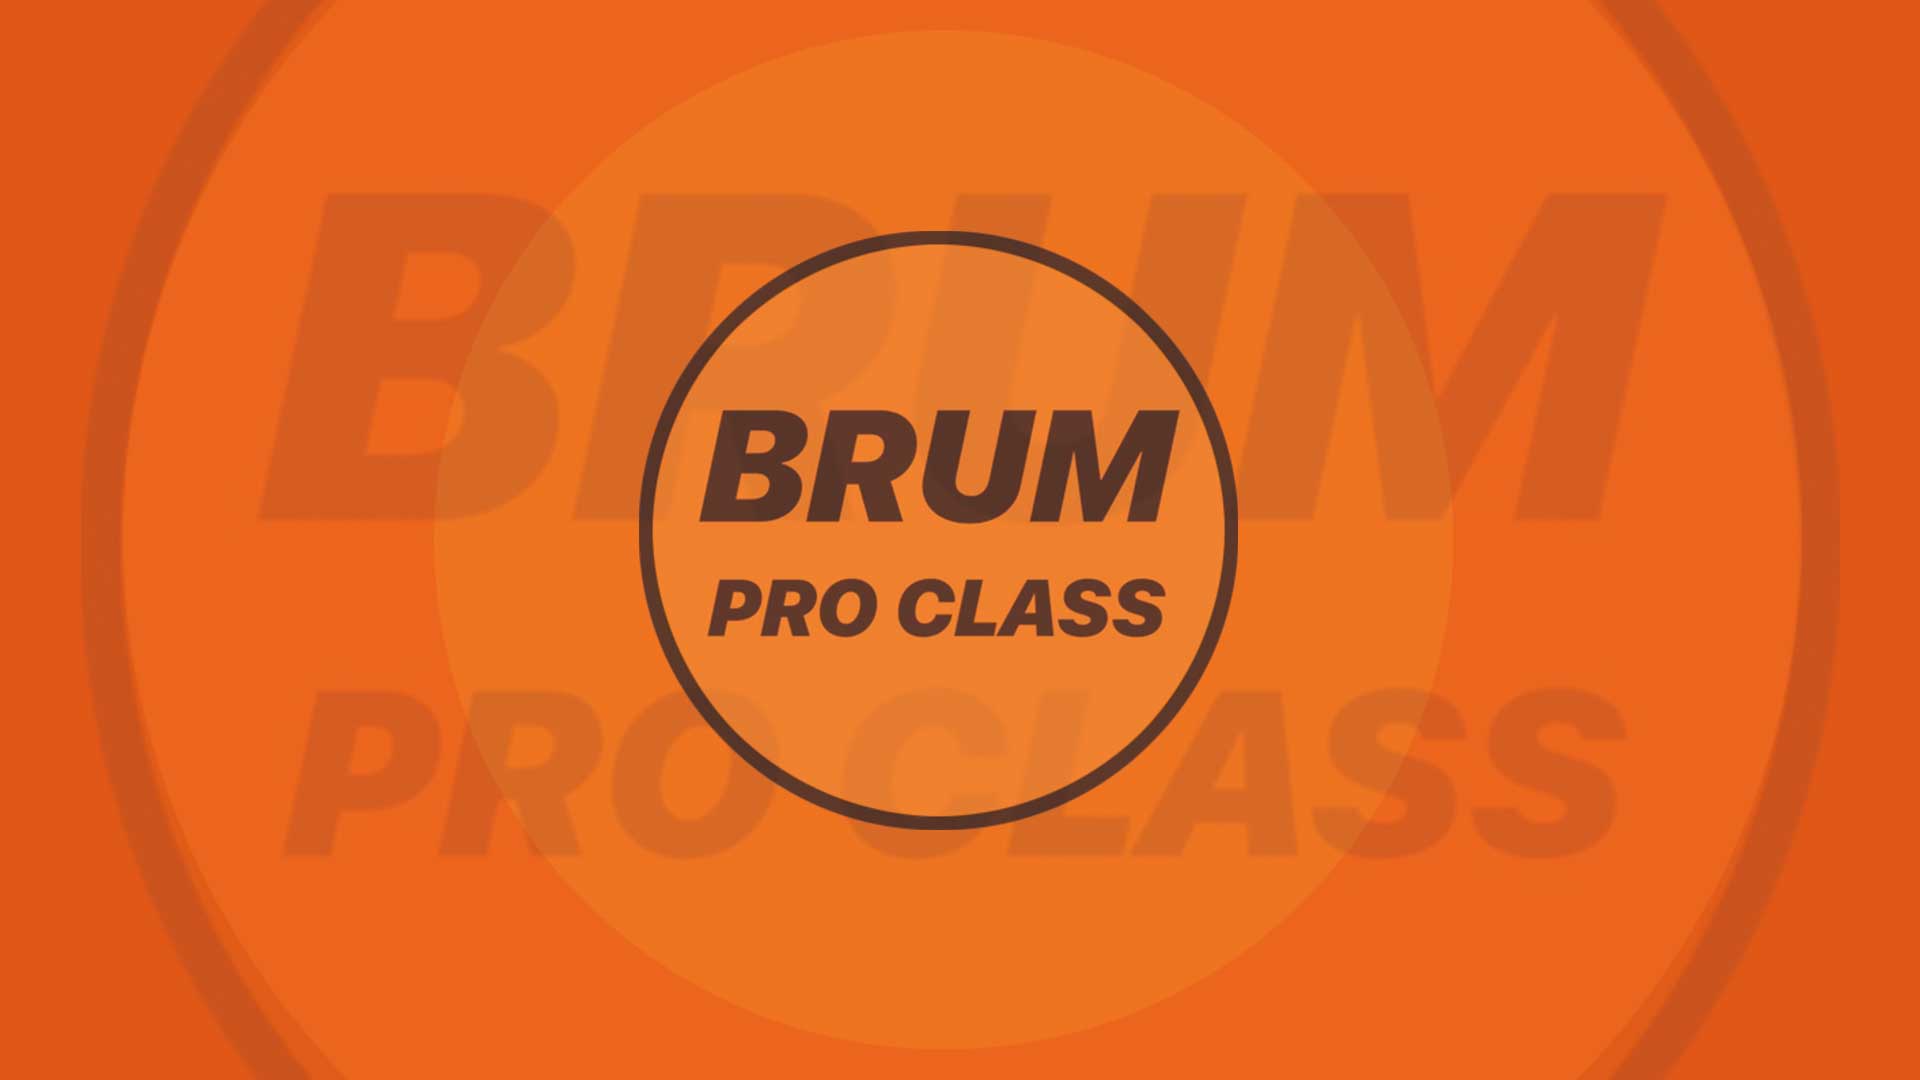 24 Nov 2022 – 10:00 @ ACE Dance & Music Brum Pro Class w/ Will Hodson